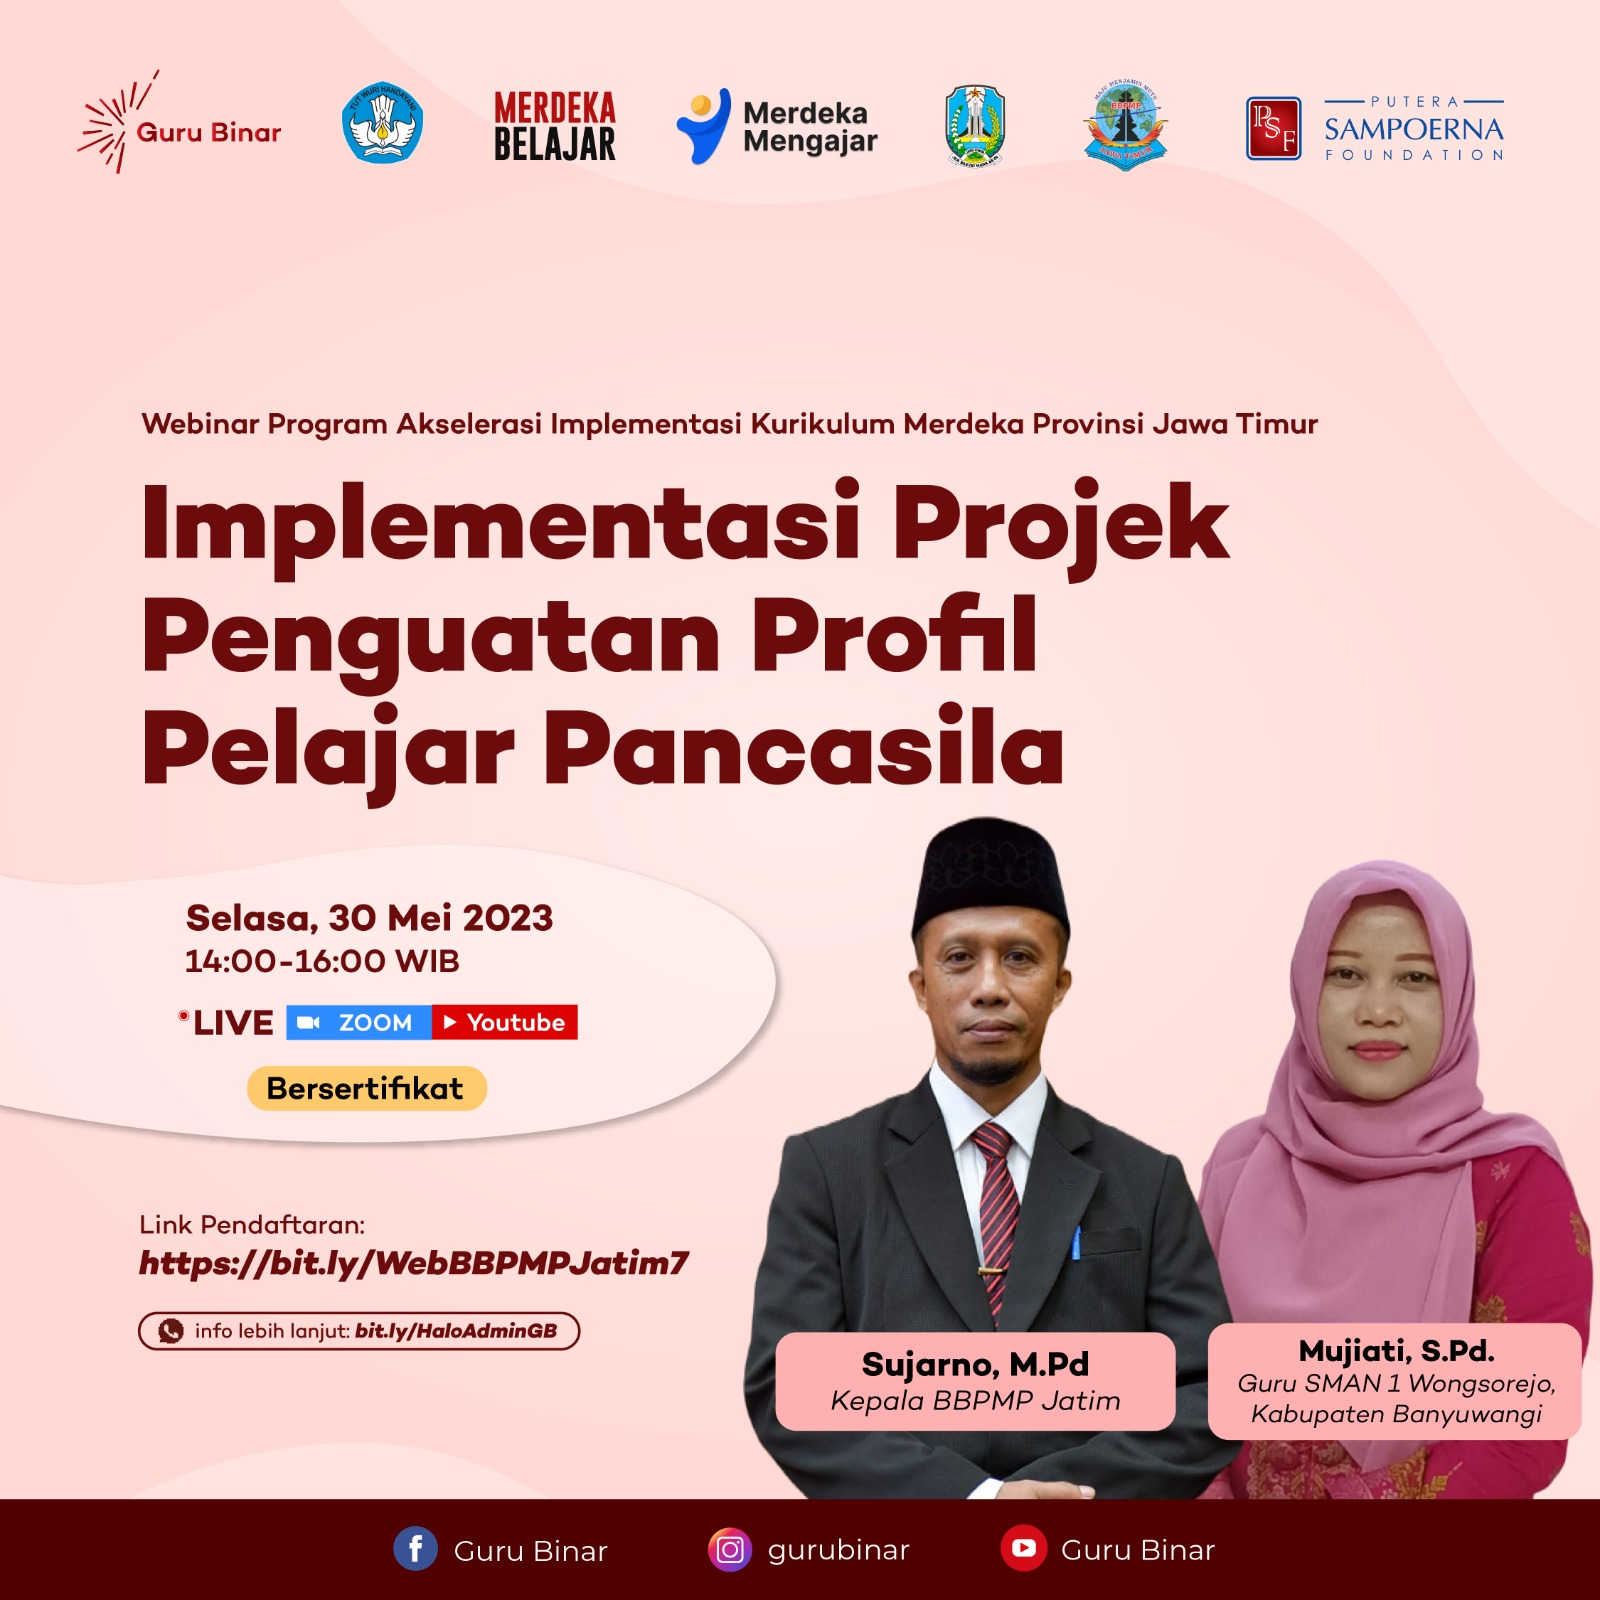 Photo Implementasi Projek Penguatan Profil Pelajar Pancasila Prov. Jawa Timur